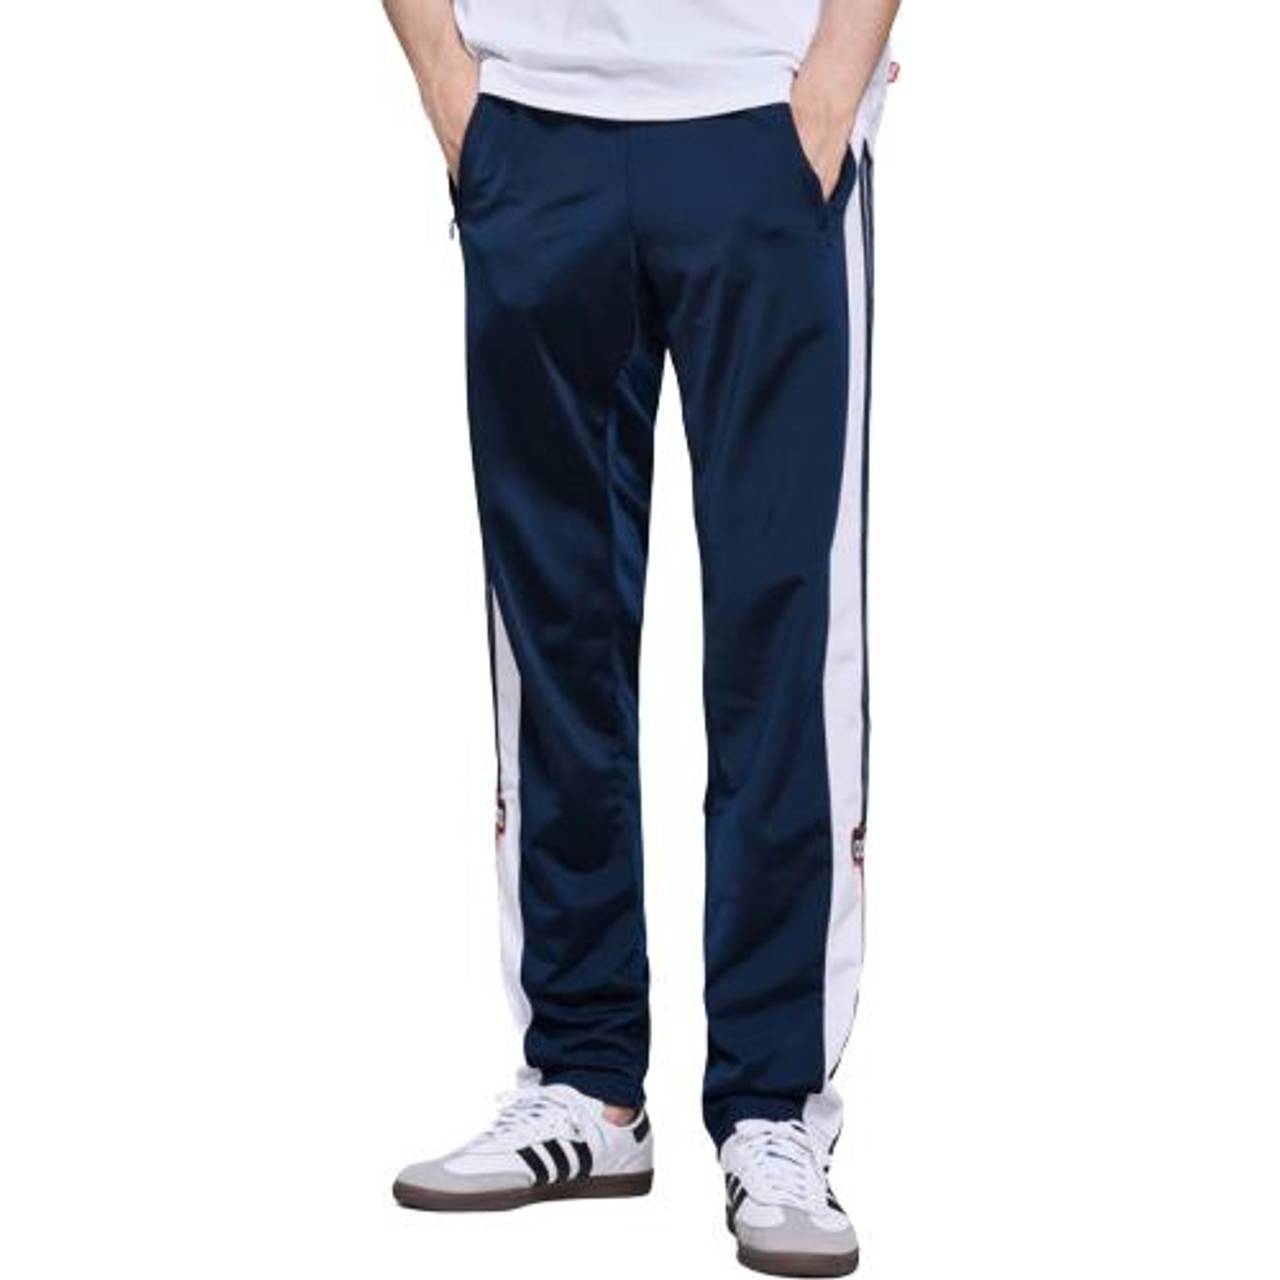 Adidas Adibreak Track Pants Men - Collegiate Navy • Price